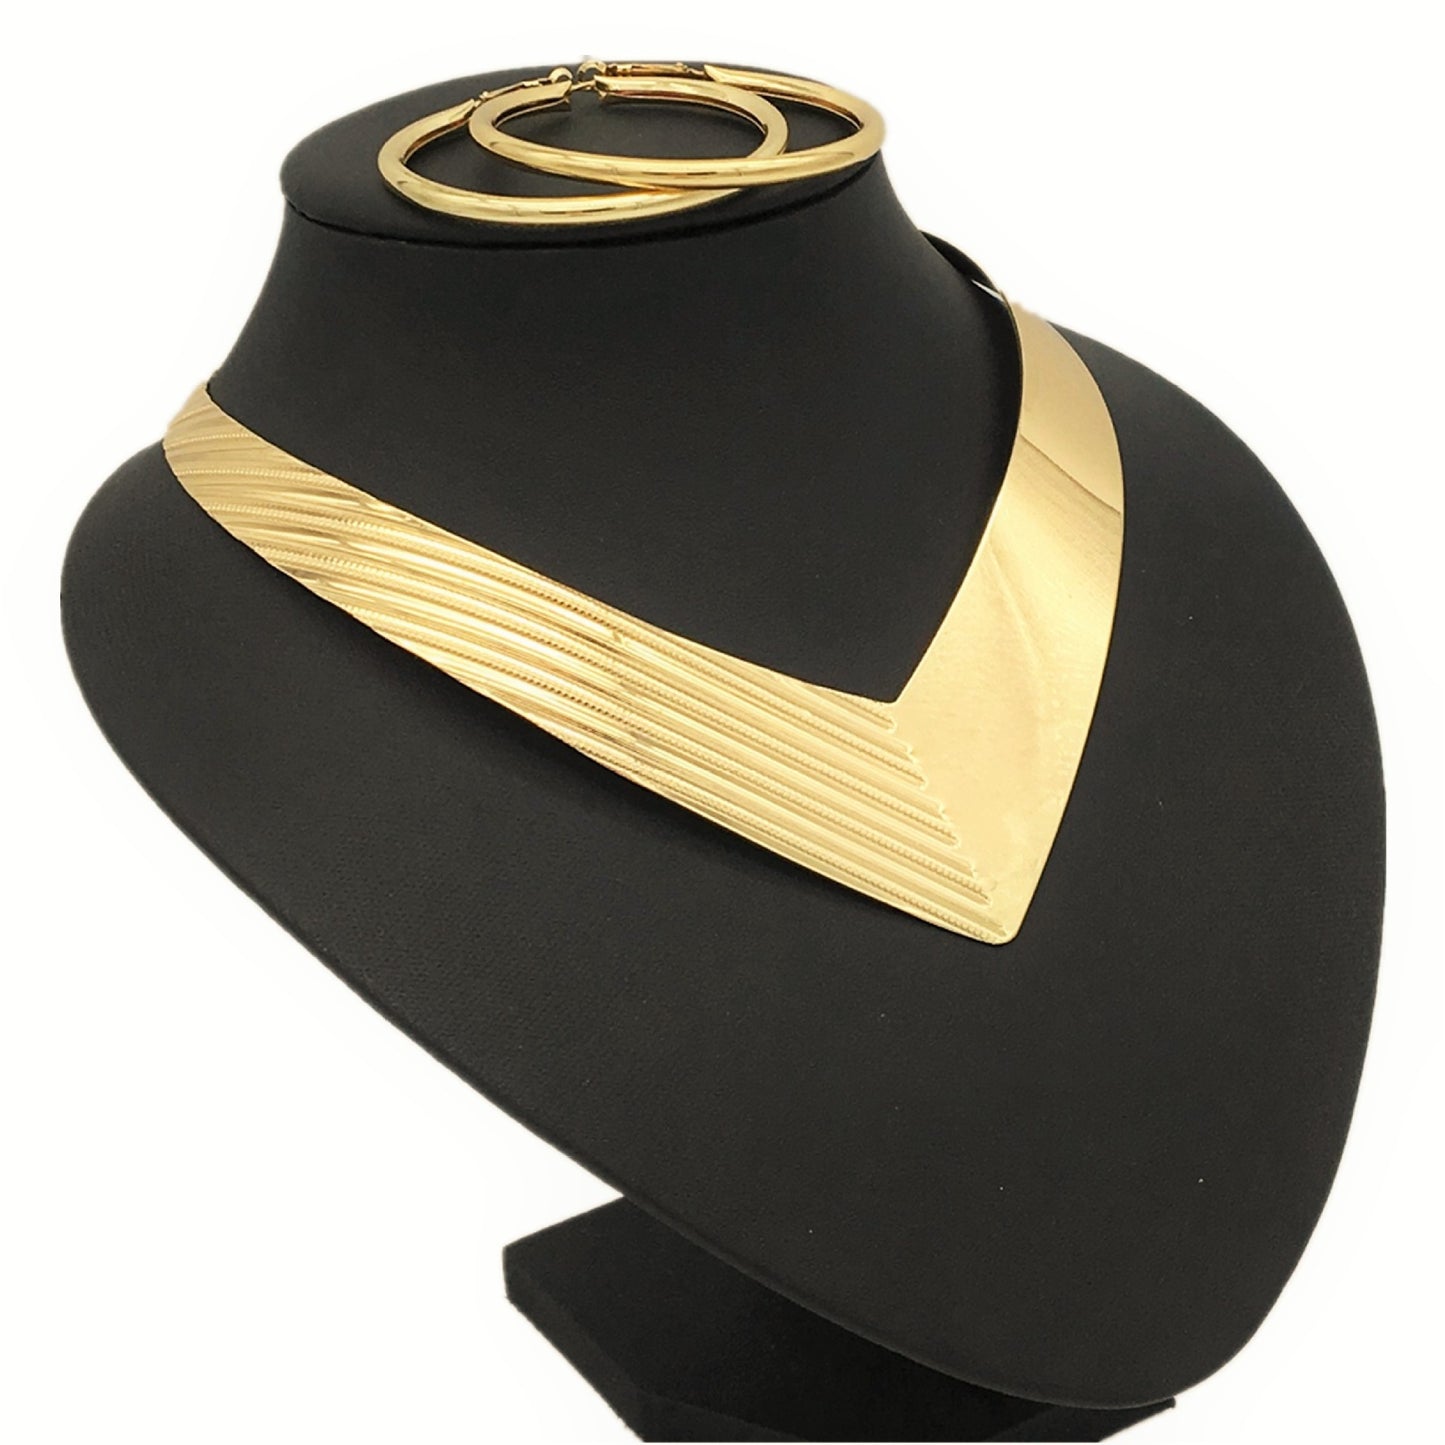 Daring Irregular Collar Necklace - Savanna Rhythms Collection